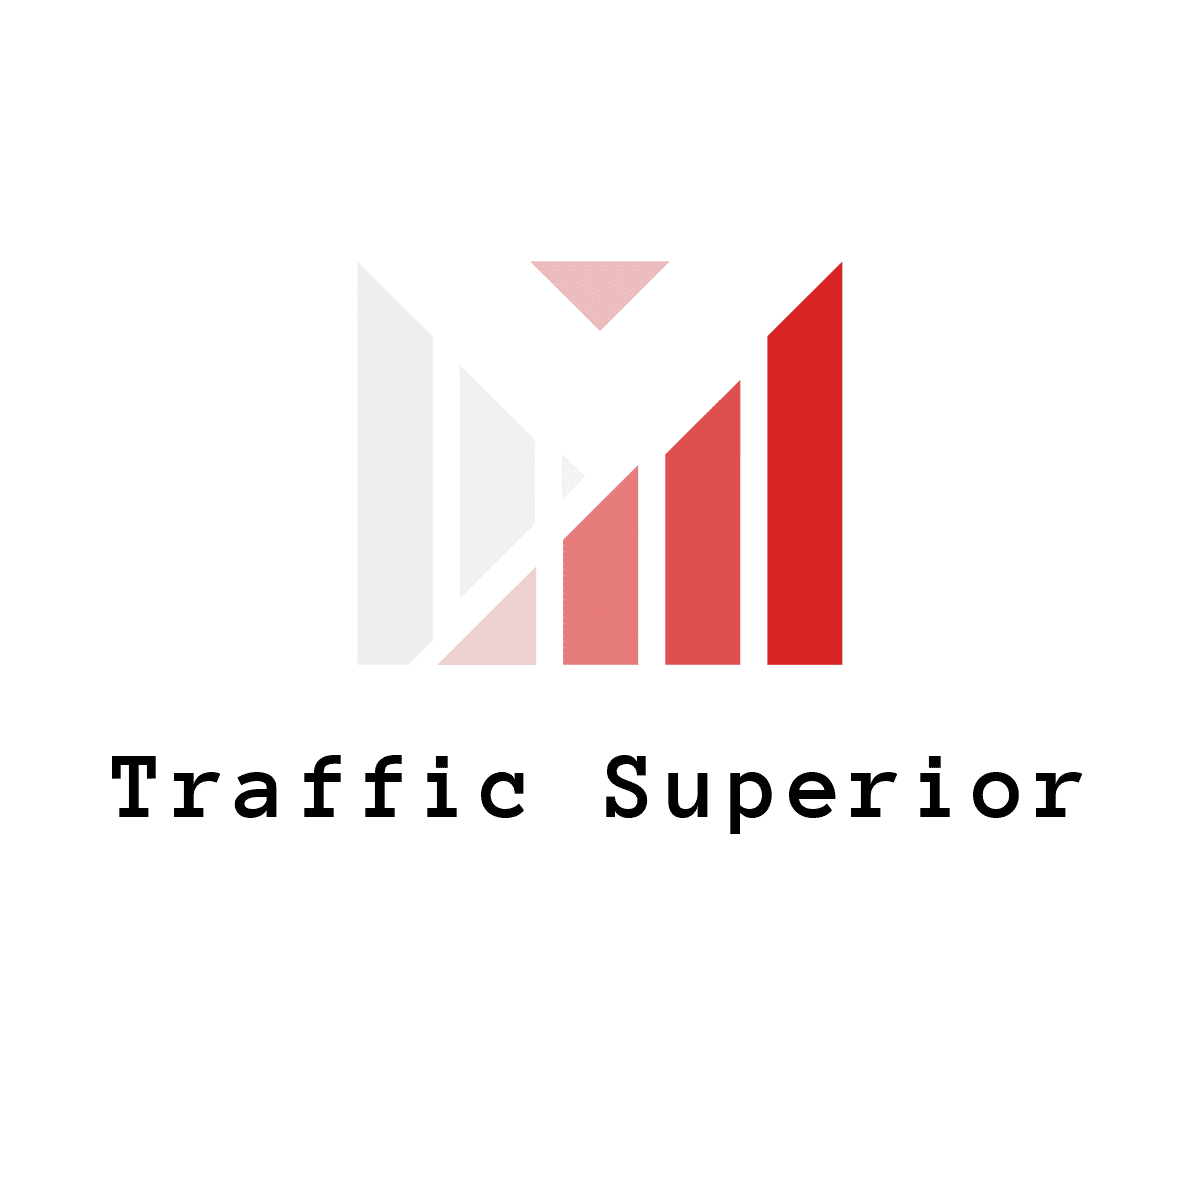 Traffic Superior Ltd